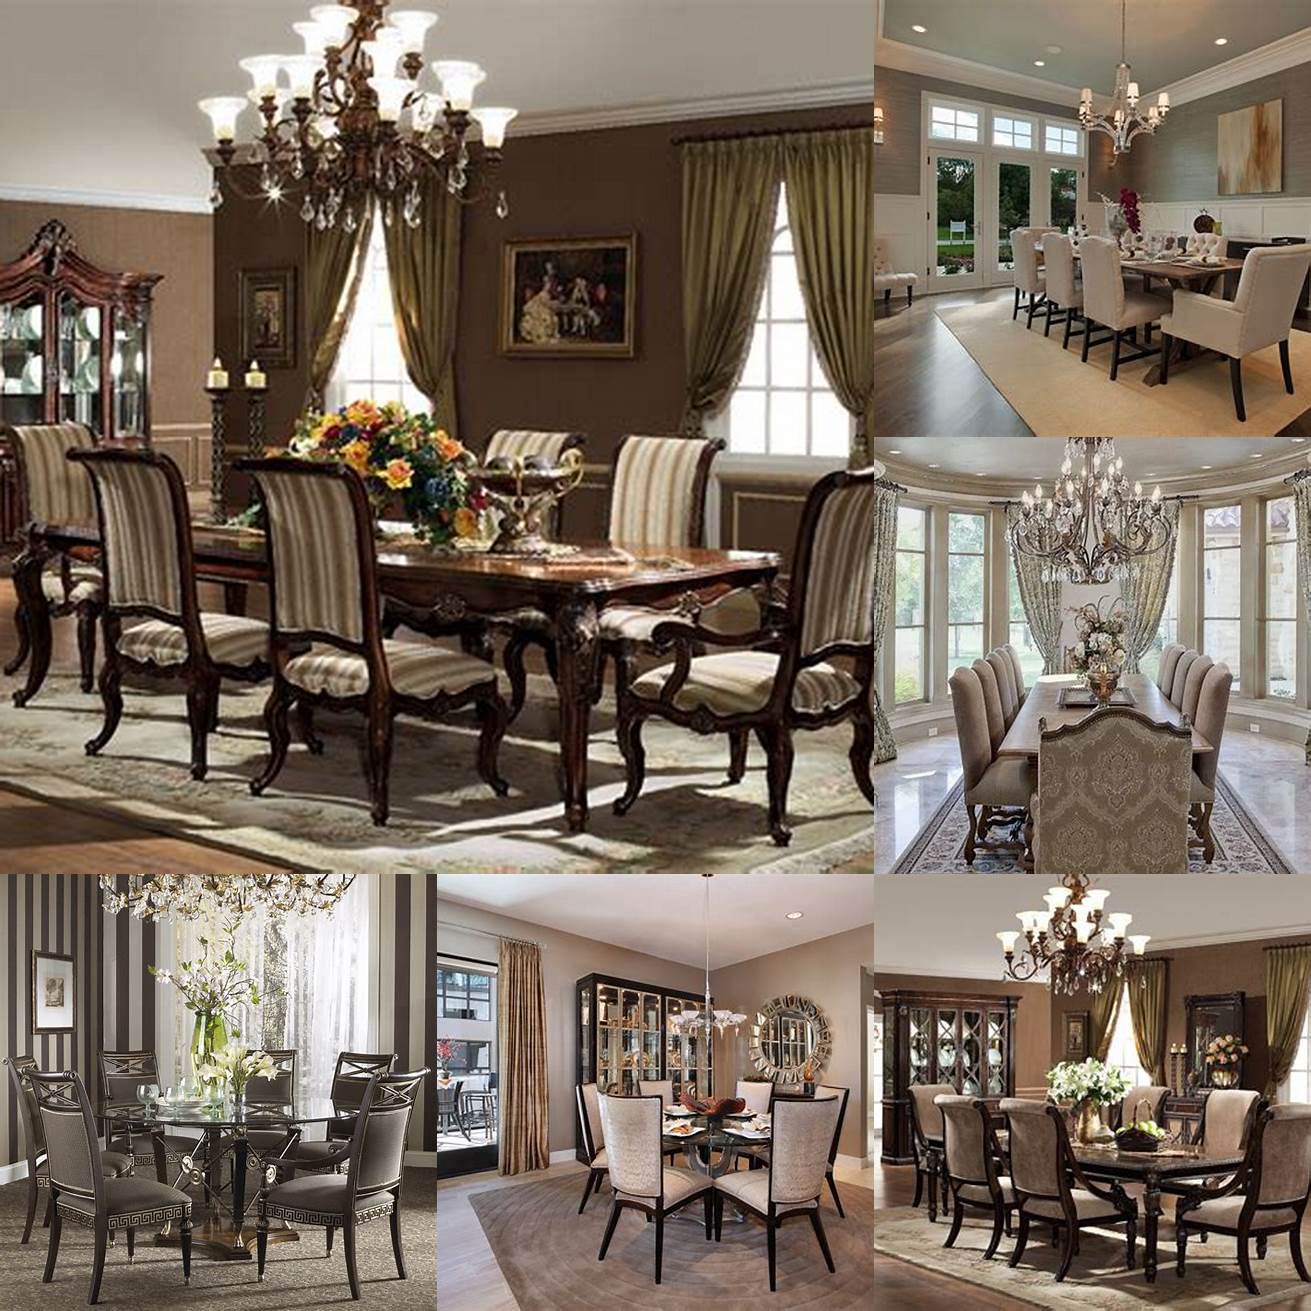 Image of a formal dining room set with an elegant design